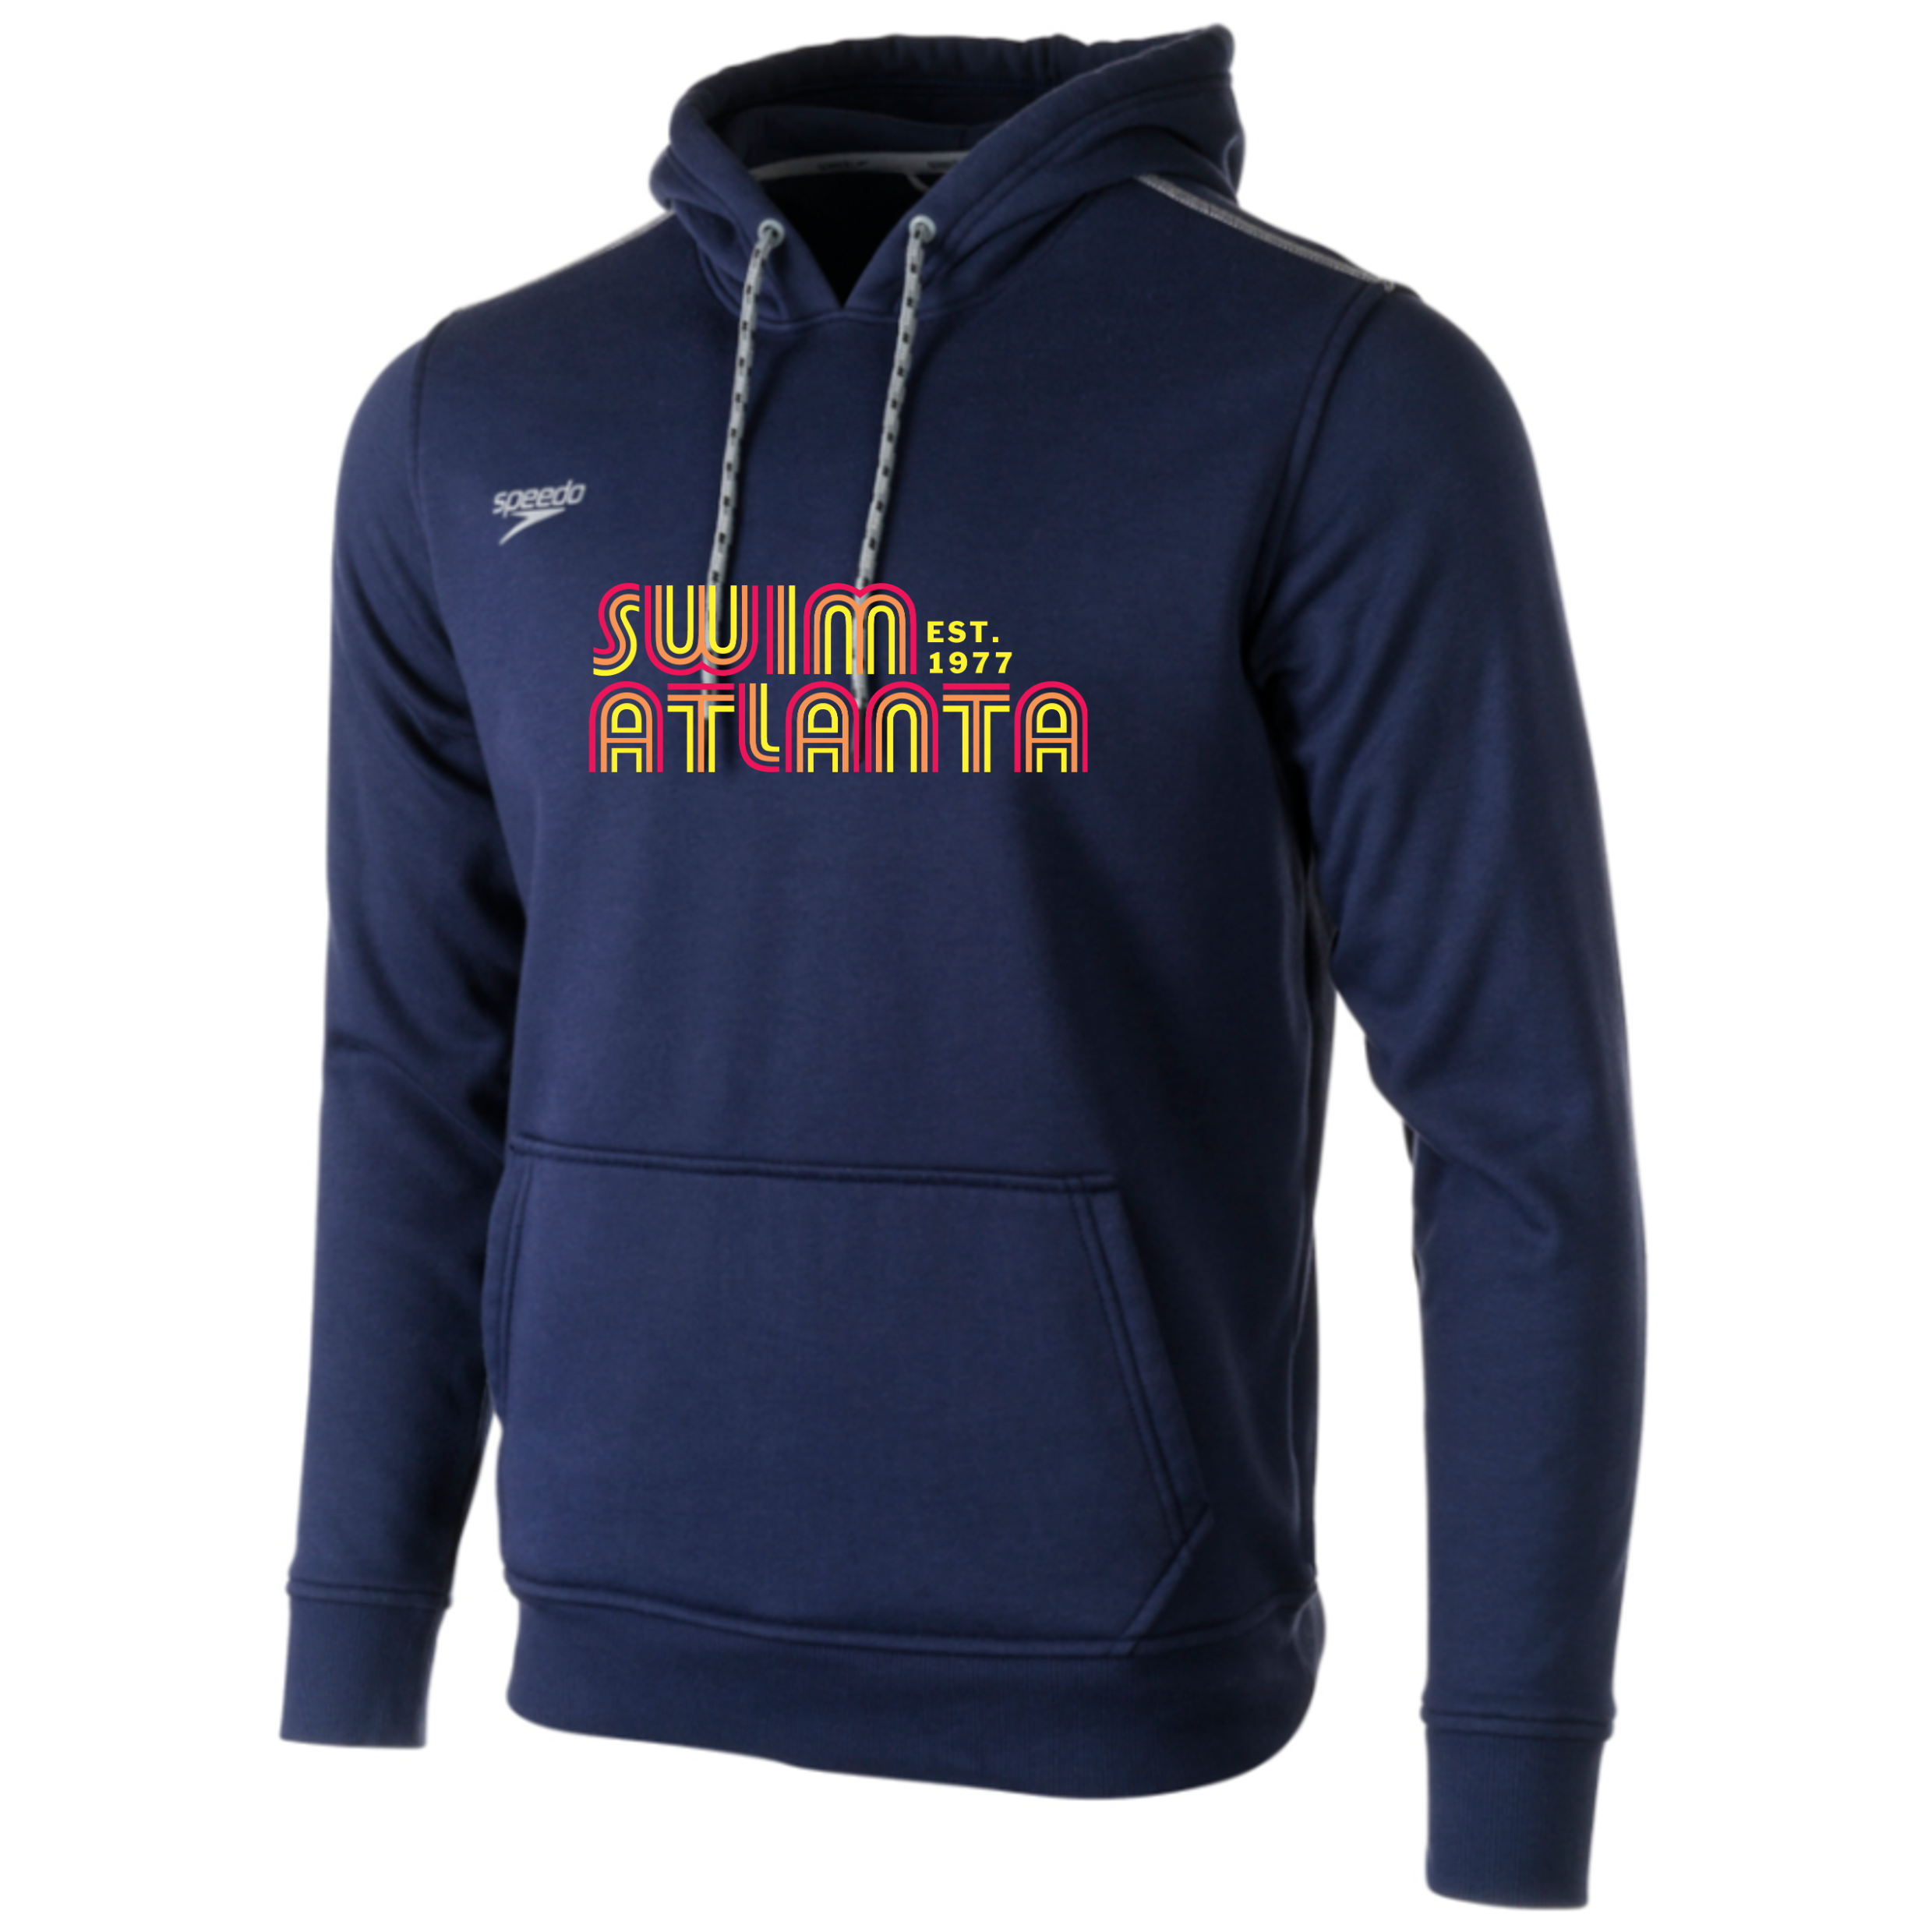 Speedo Unisex Hooded Sweatshirt #1 - Swim Atlanta